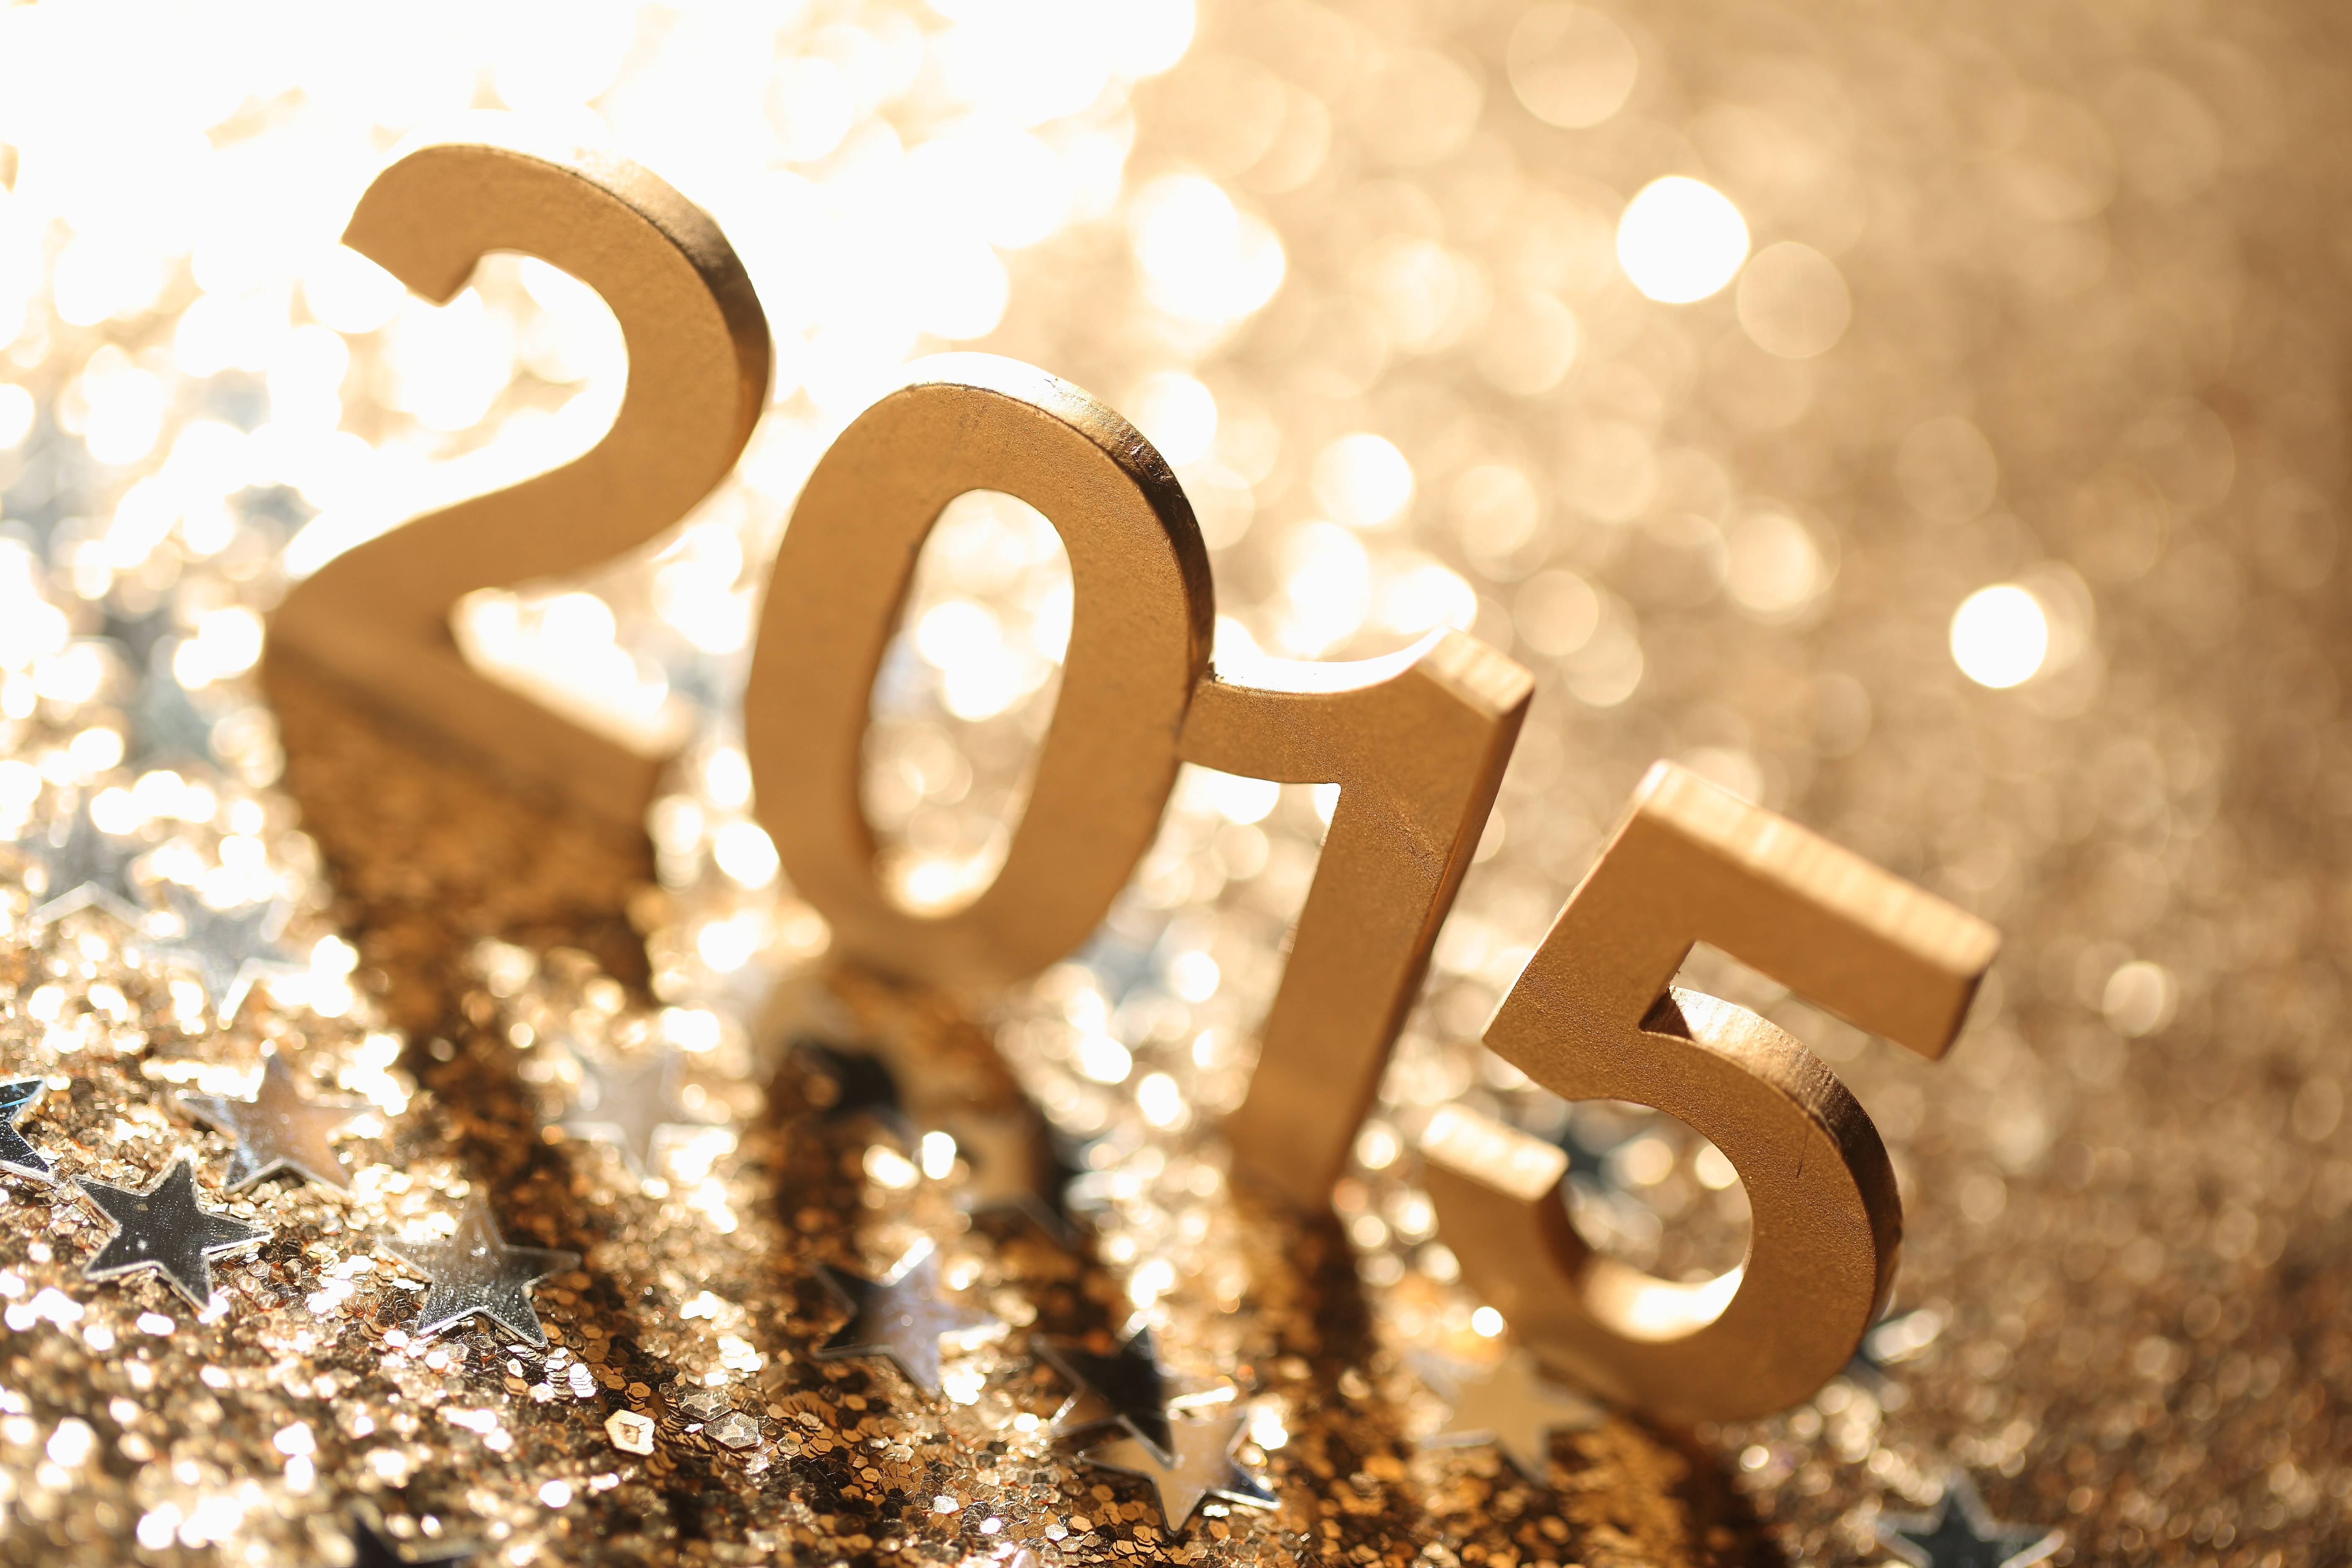 Новинки 2015 год. 2015 Год. Новый год 2015. Цифры на новый год. 2015 Год картинки.